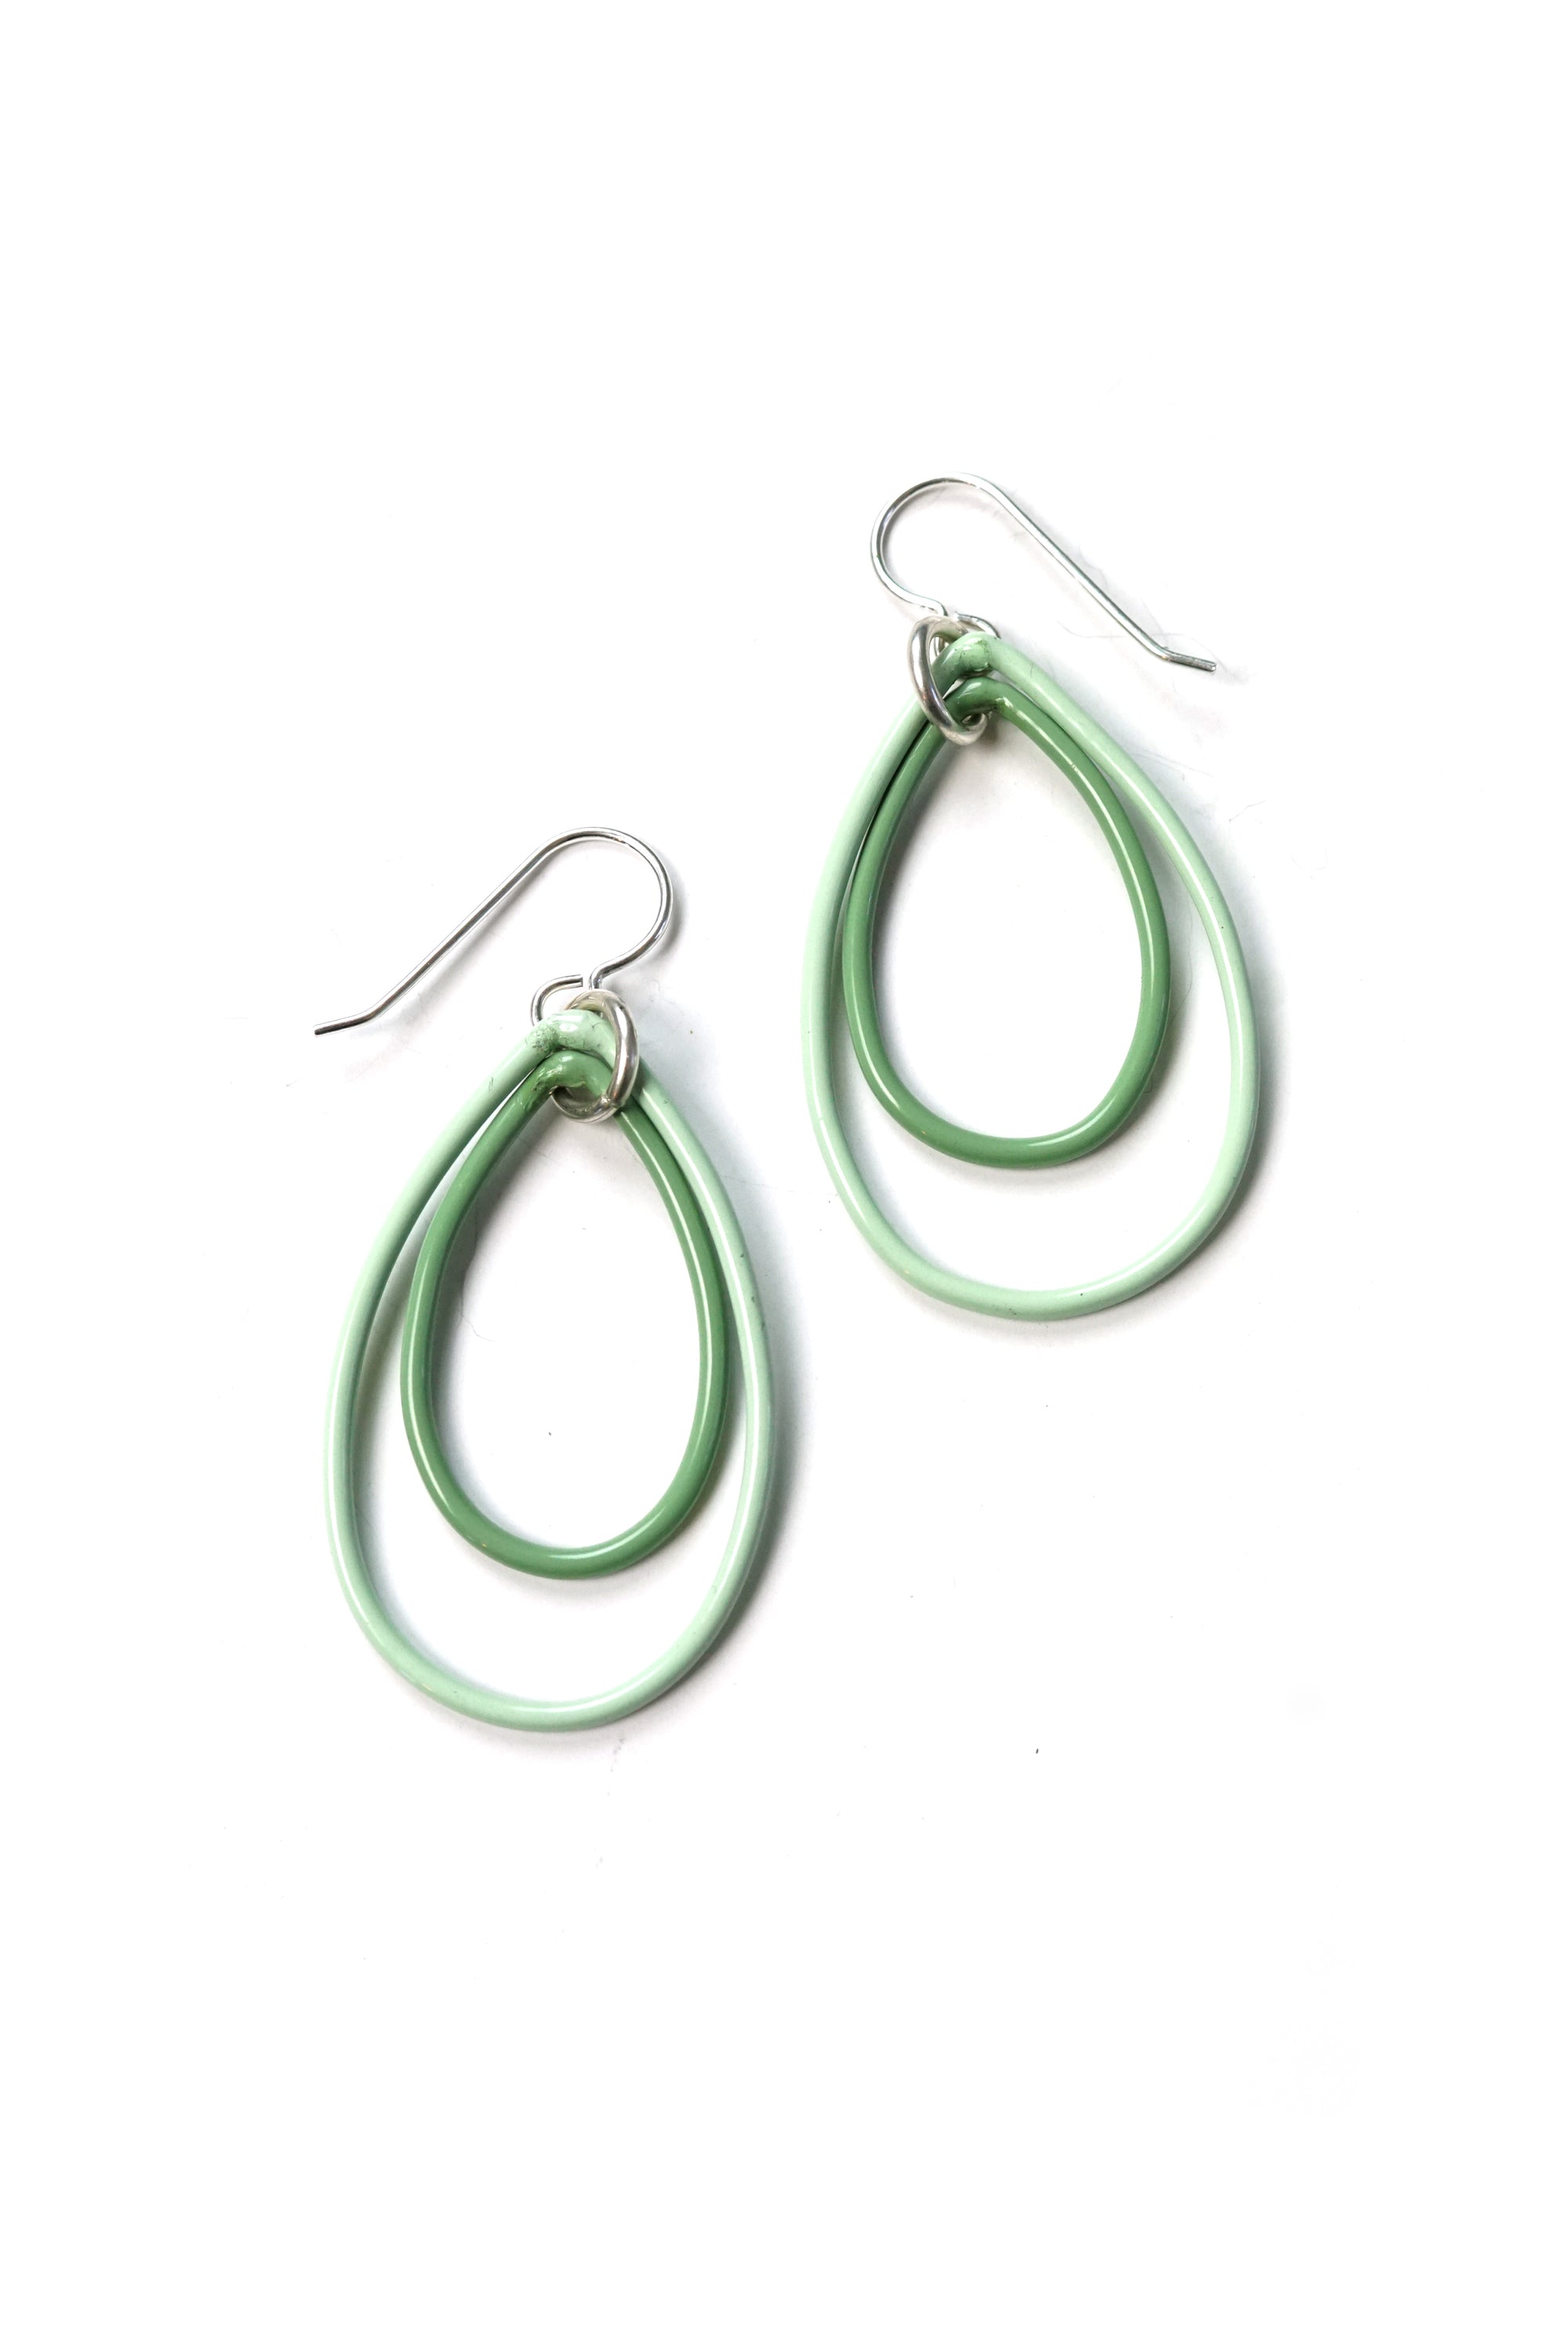 Ella earrings in Soft Mint and Pale Green